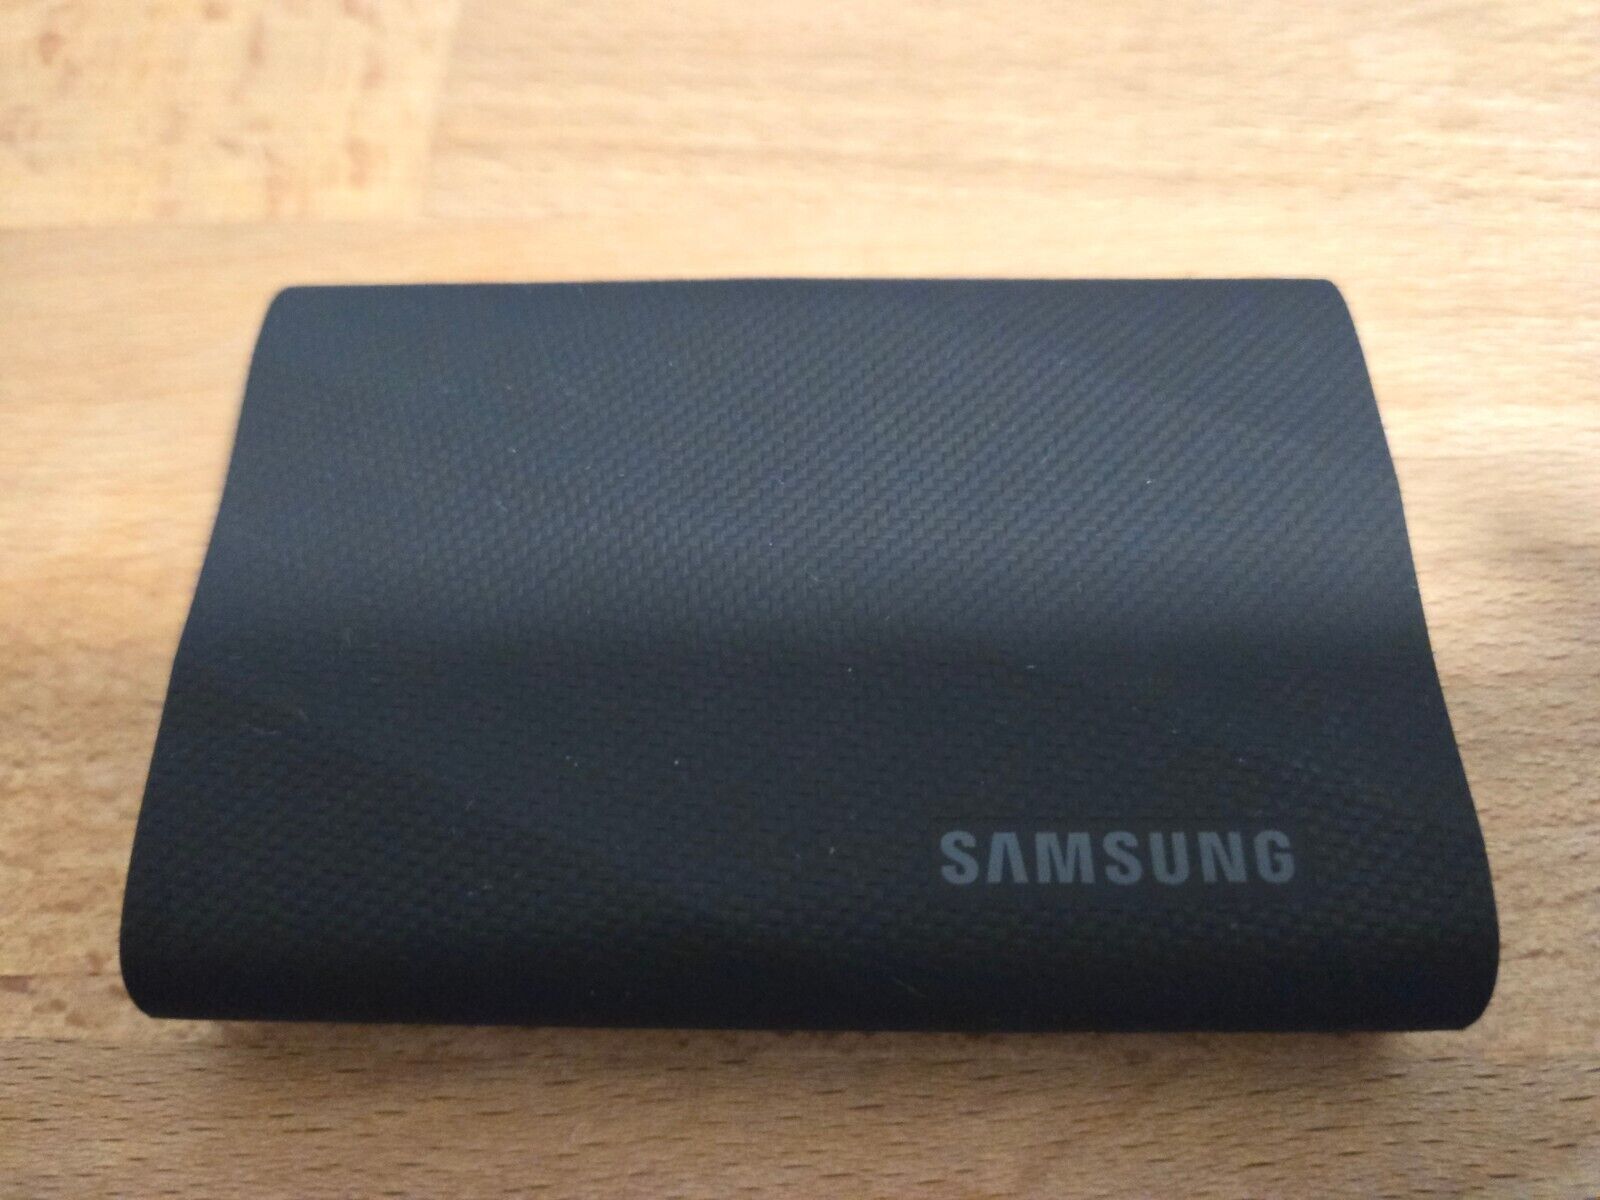 Samsung - T9 Portable SSD 2TB, Up to 2,000MB/s, USB 3.2 Gen2 - Black